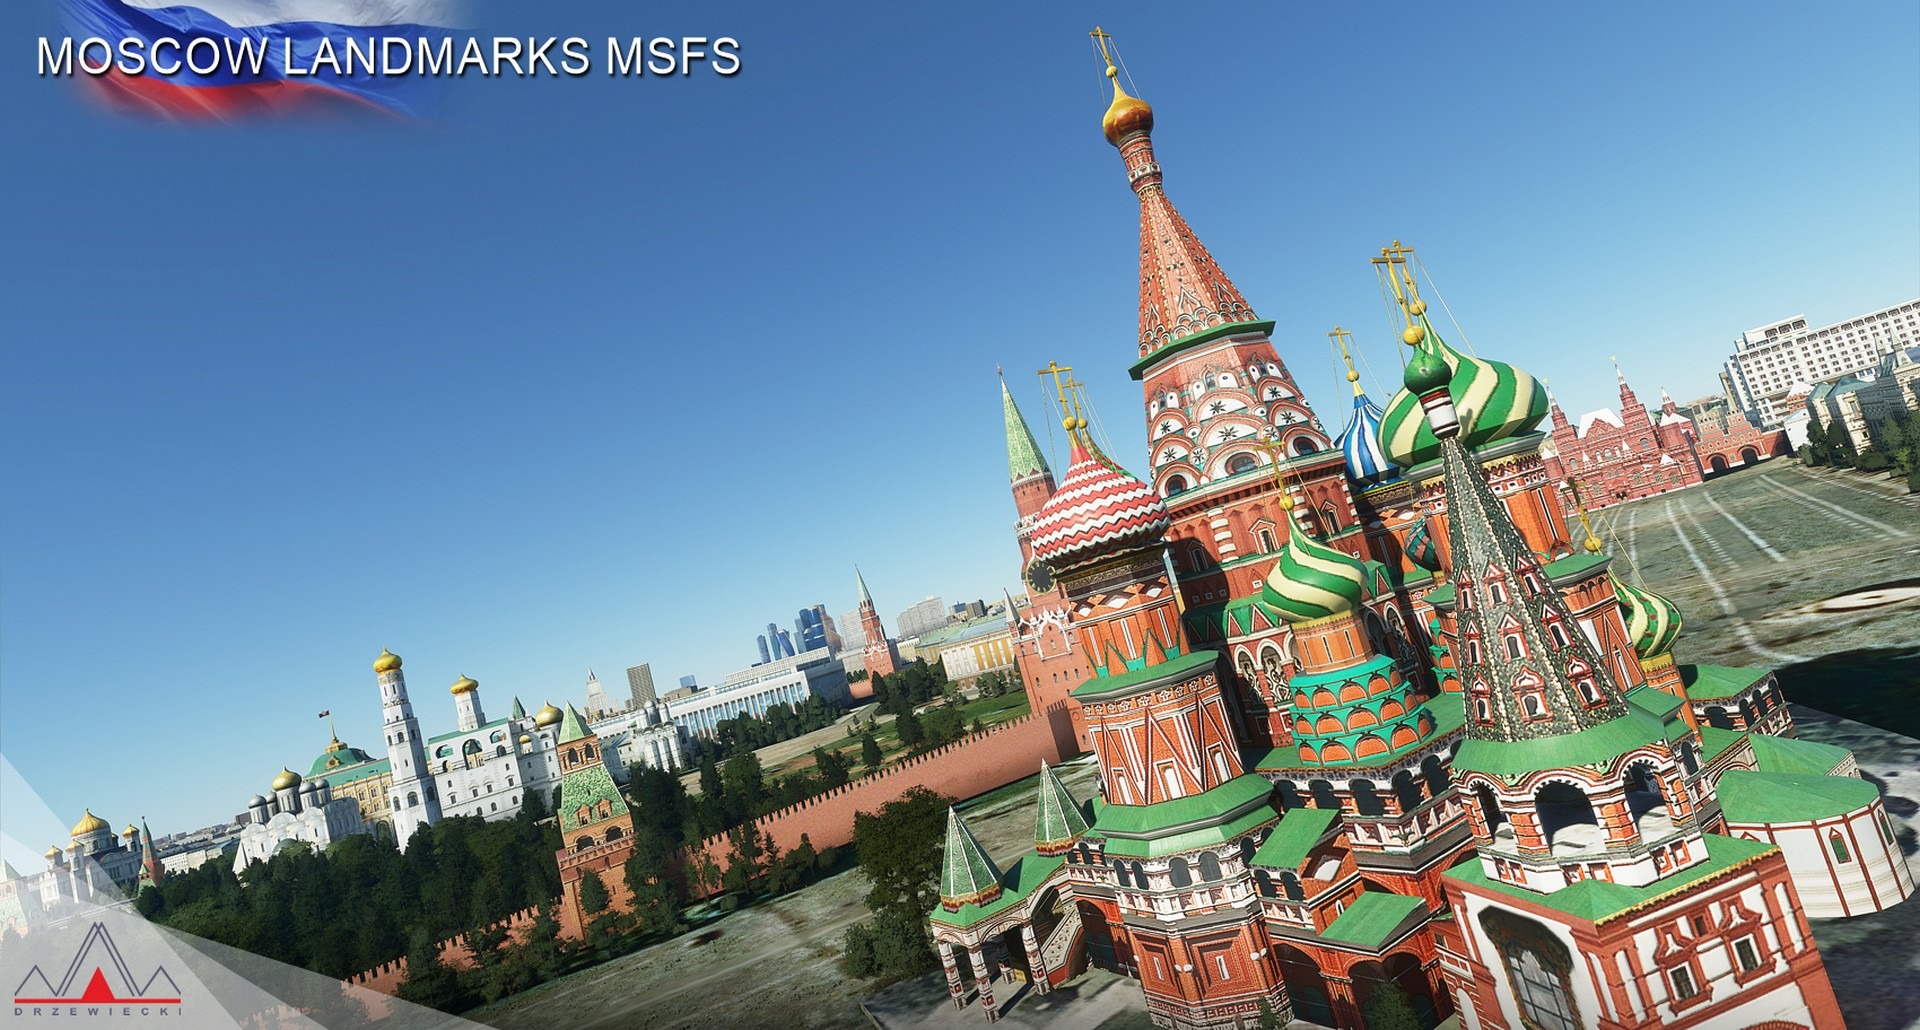 The kremlin has been. MFS 2020 Москва. Moscow landmarks Drzewiecki Design. Microsoft Flight Simulator 2020 Москва Сити. Landmarks of Moscow MFS 2020.